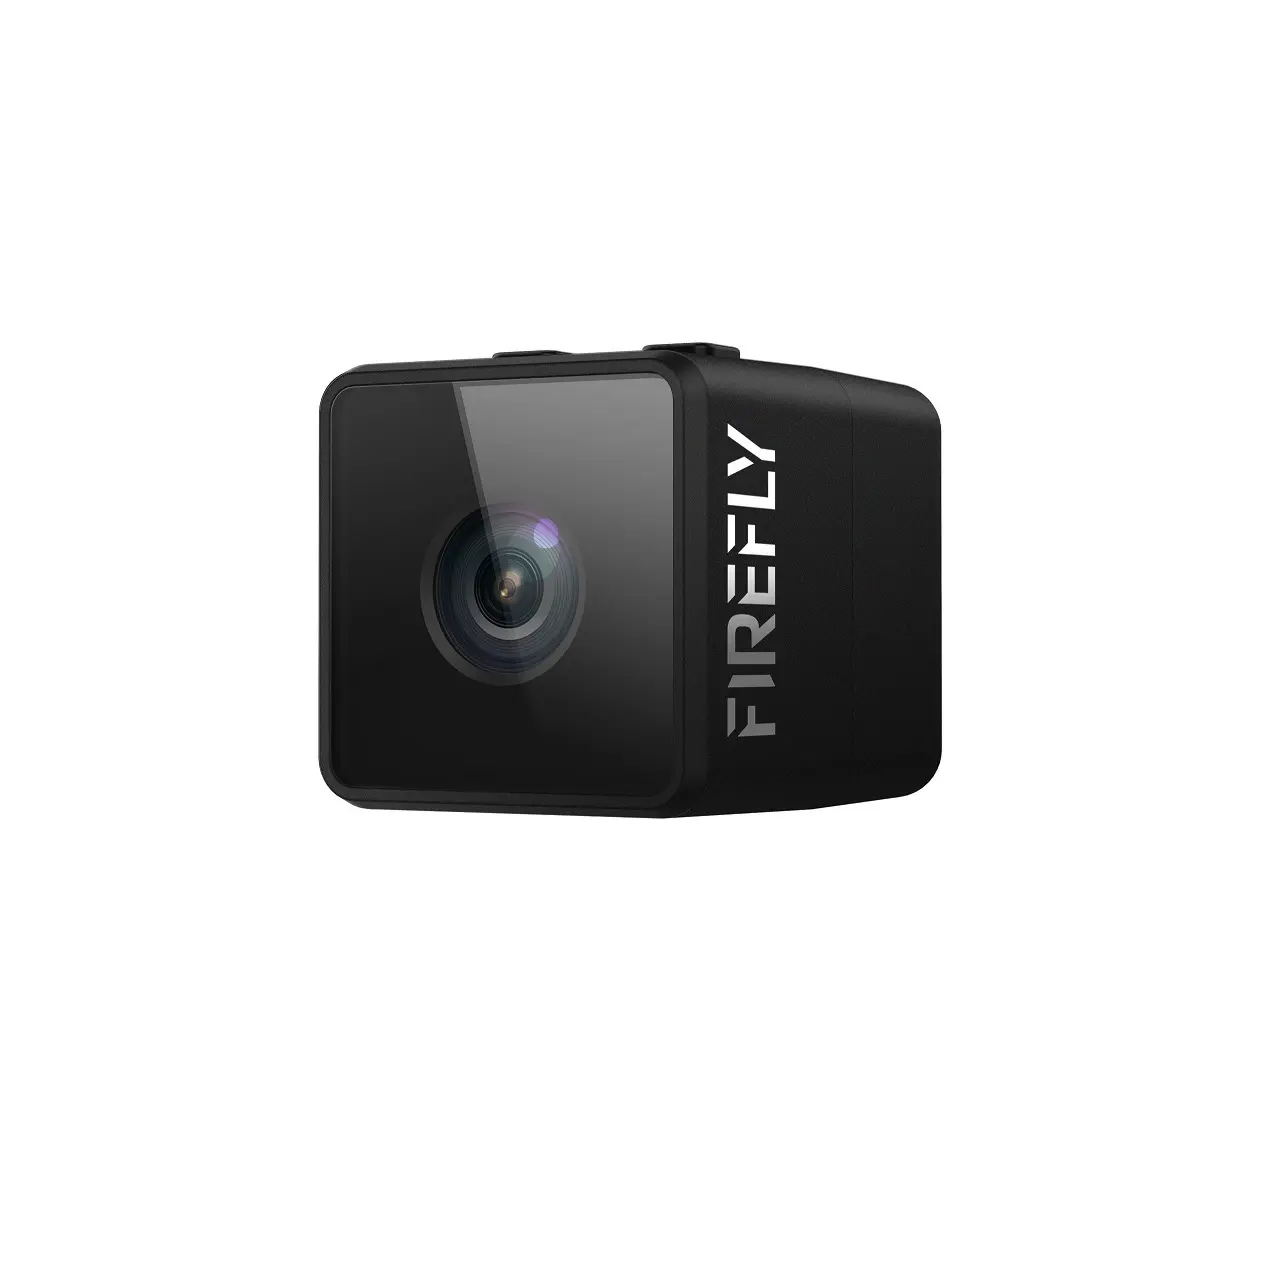 Миниатюрная Экшн-камера Hawk eye firefly, full hd, 1080p, 30 кадров/с, всего 14 ГБ, для мини-дрона, Спортивная камера